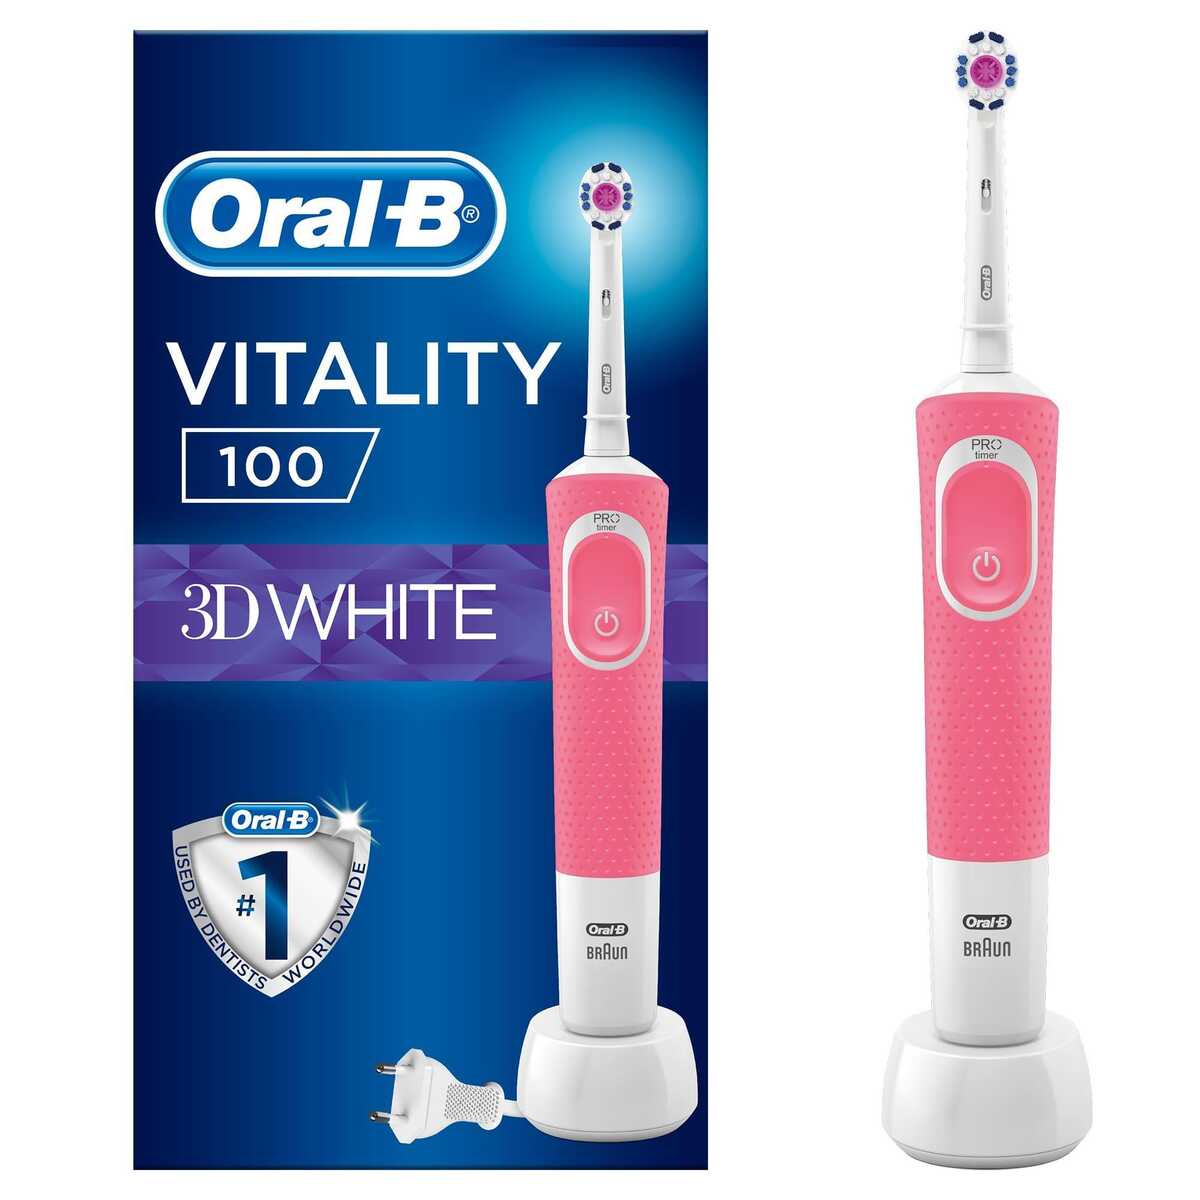 Oral-B D100 Vitality 3D White Şarjlı Diş Fırçası - Pembe